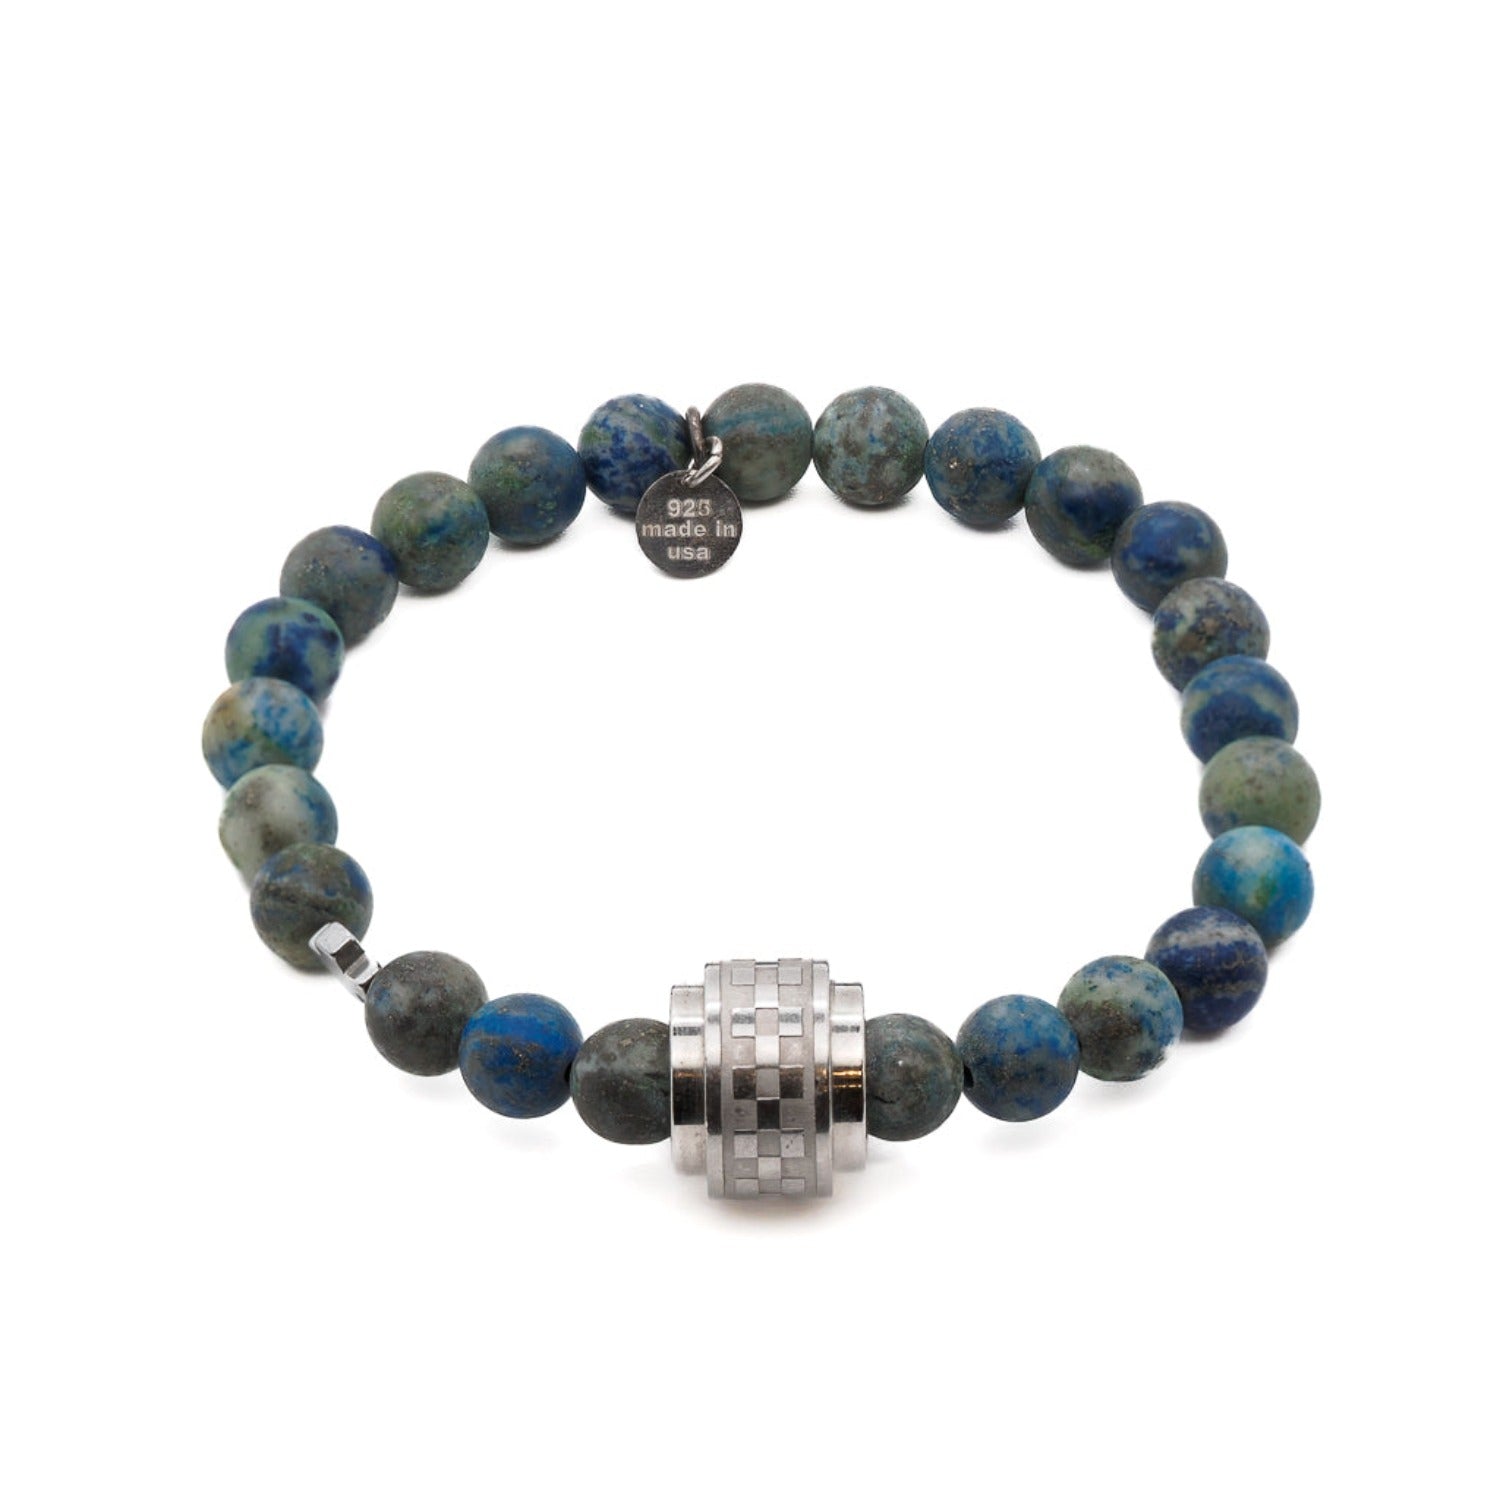 Third Eye Azurite Bracelet - Handmade Accessory for Spiritual Awareness.